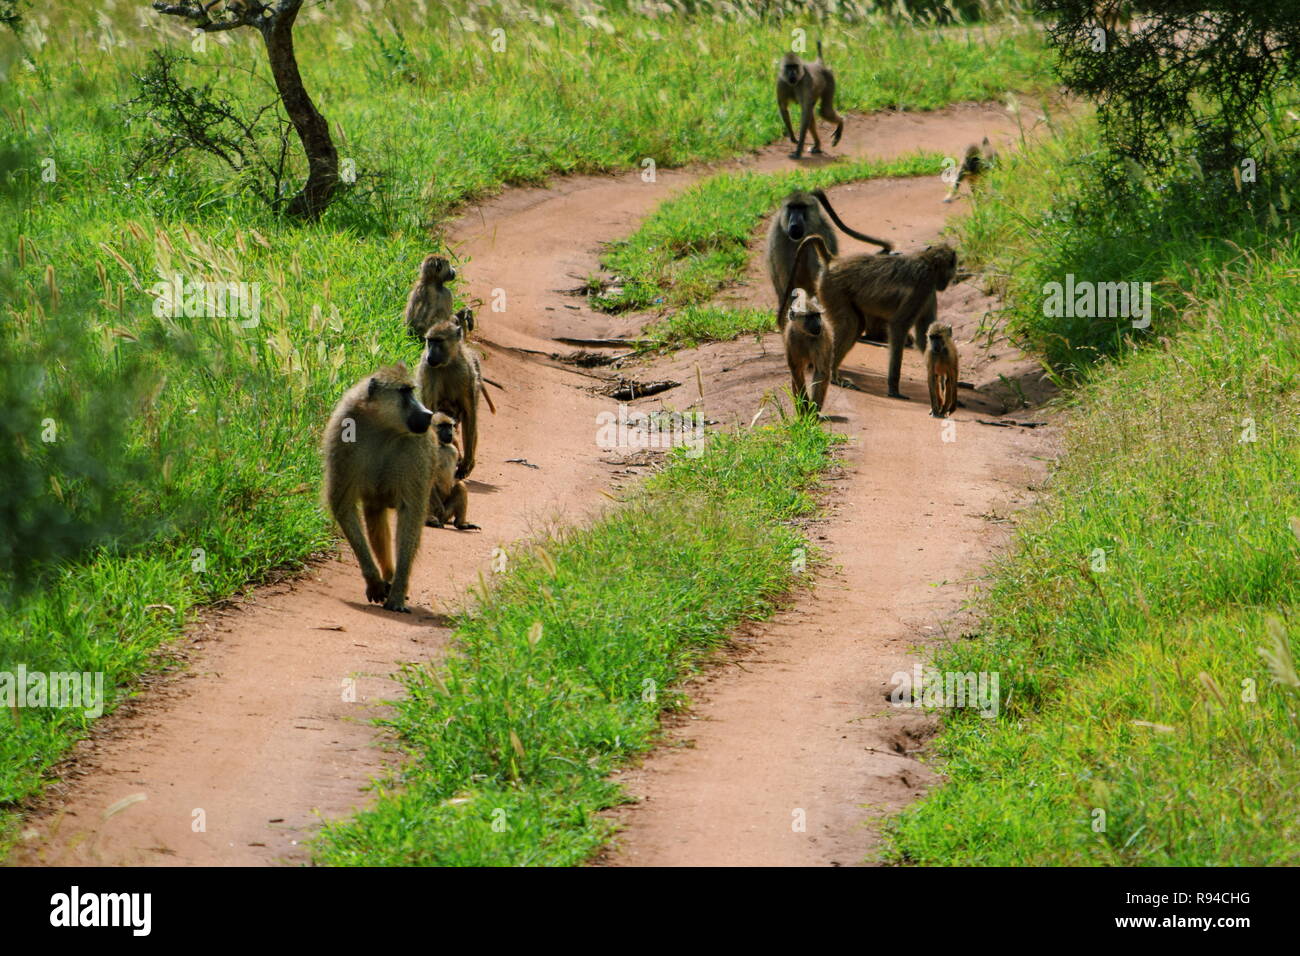 A group of baboons at Taita Hills Wildlife Sanctuary, Kenya Stock Photo